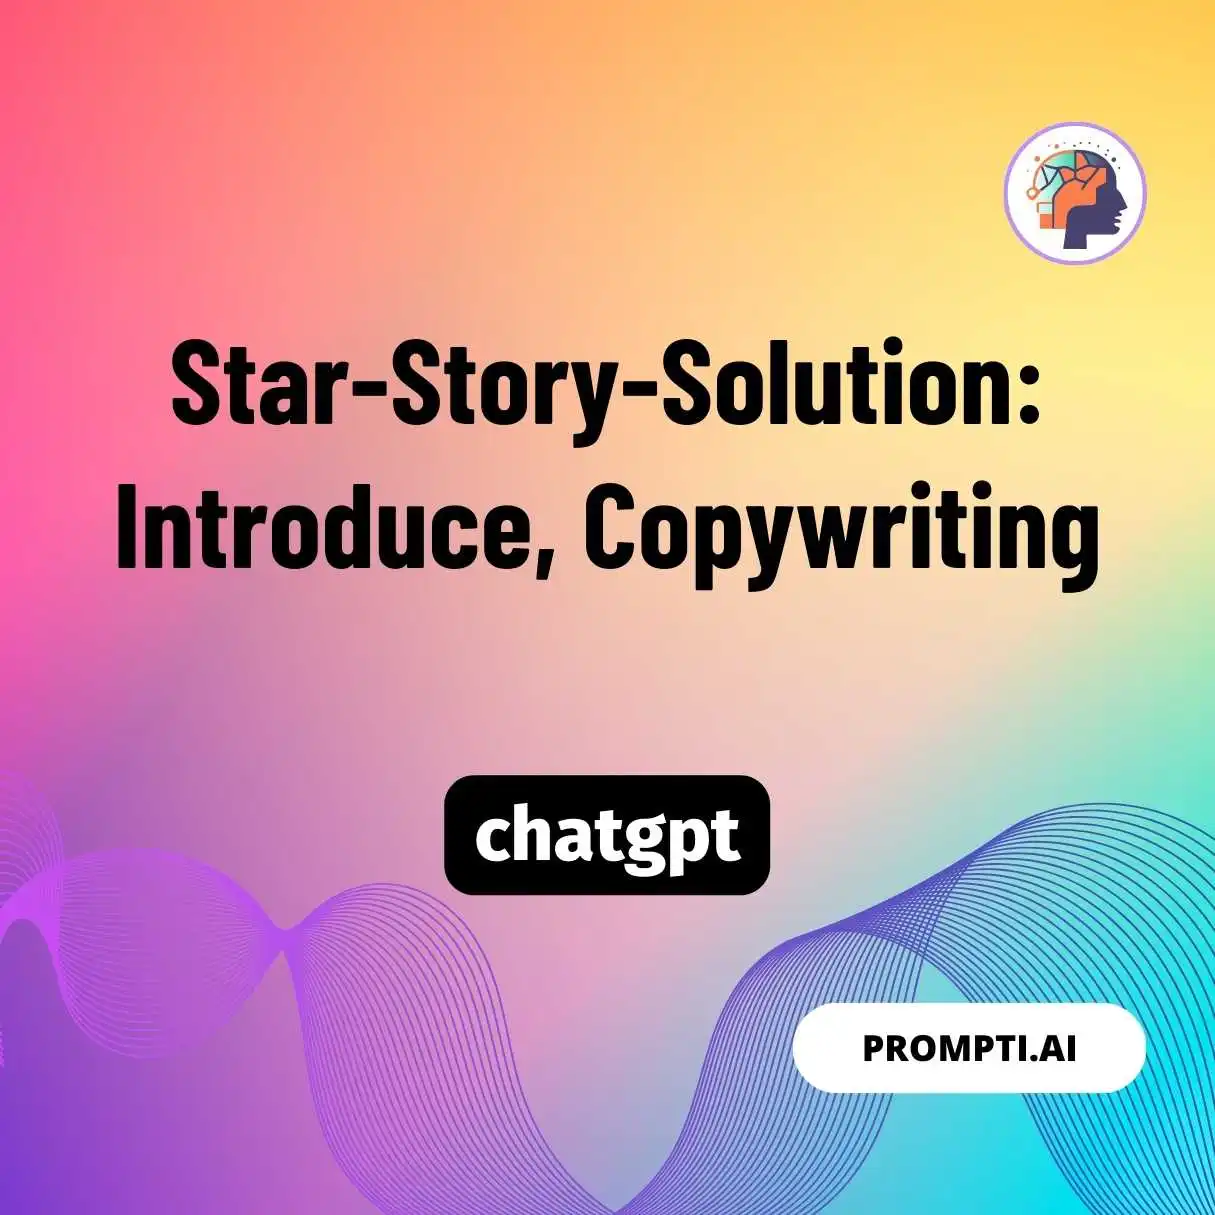 Star-Story-Solution: Introduce, Copywriting